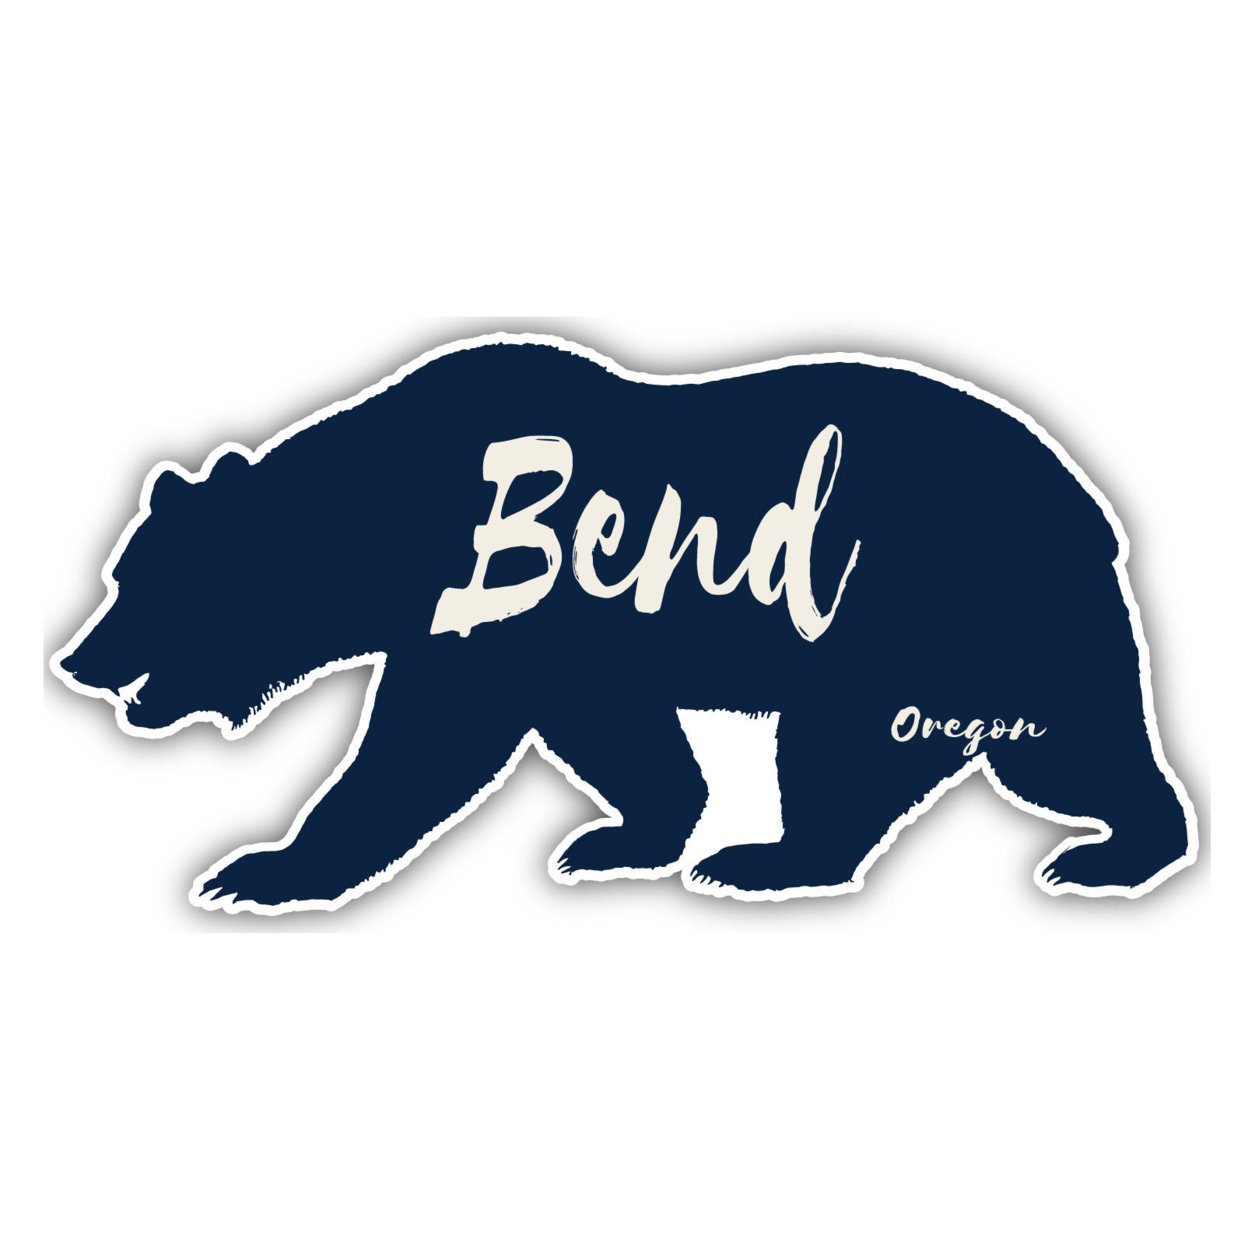 Bend Oregon Souvenir Decorative Stickers (Choose Theme And Size) - 4-Pack, 2-Inch, Bear